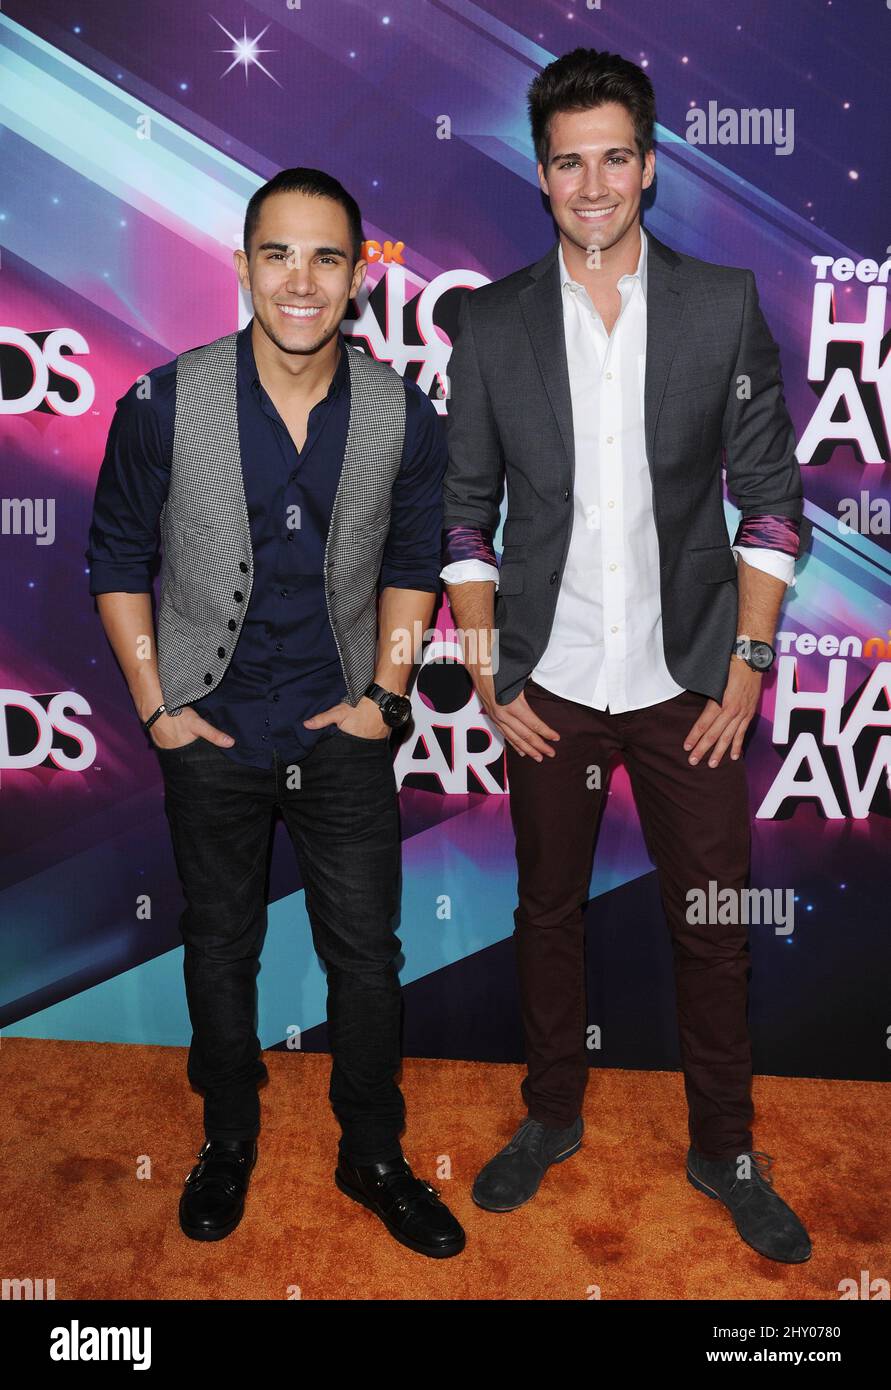 Carlos Pena Jr and James Maslow arriving at the 2012 Halo Awards at the Hollywood Palladium in Los Angeles. Stock Photo